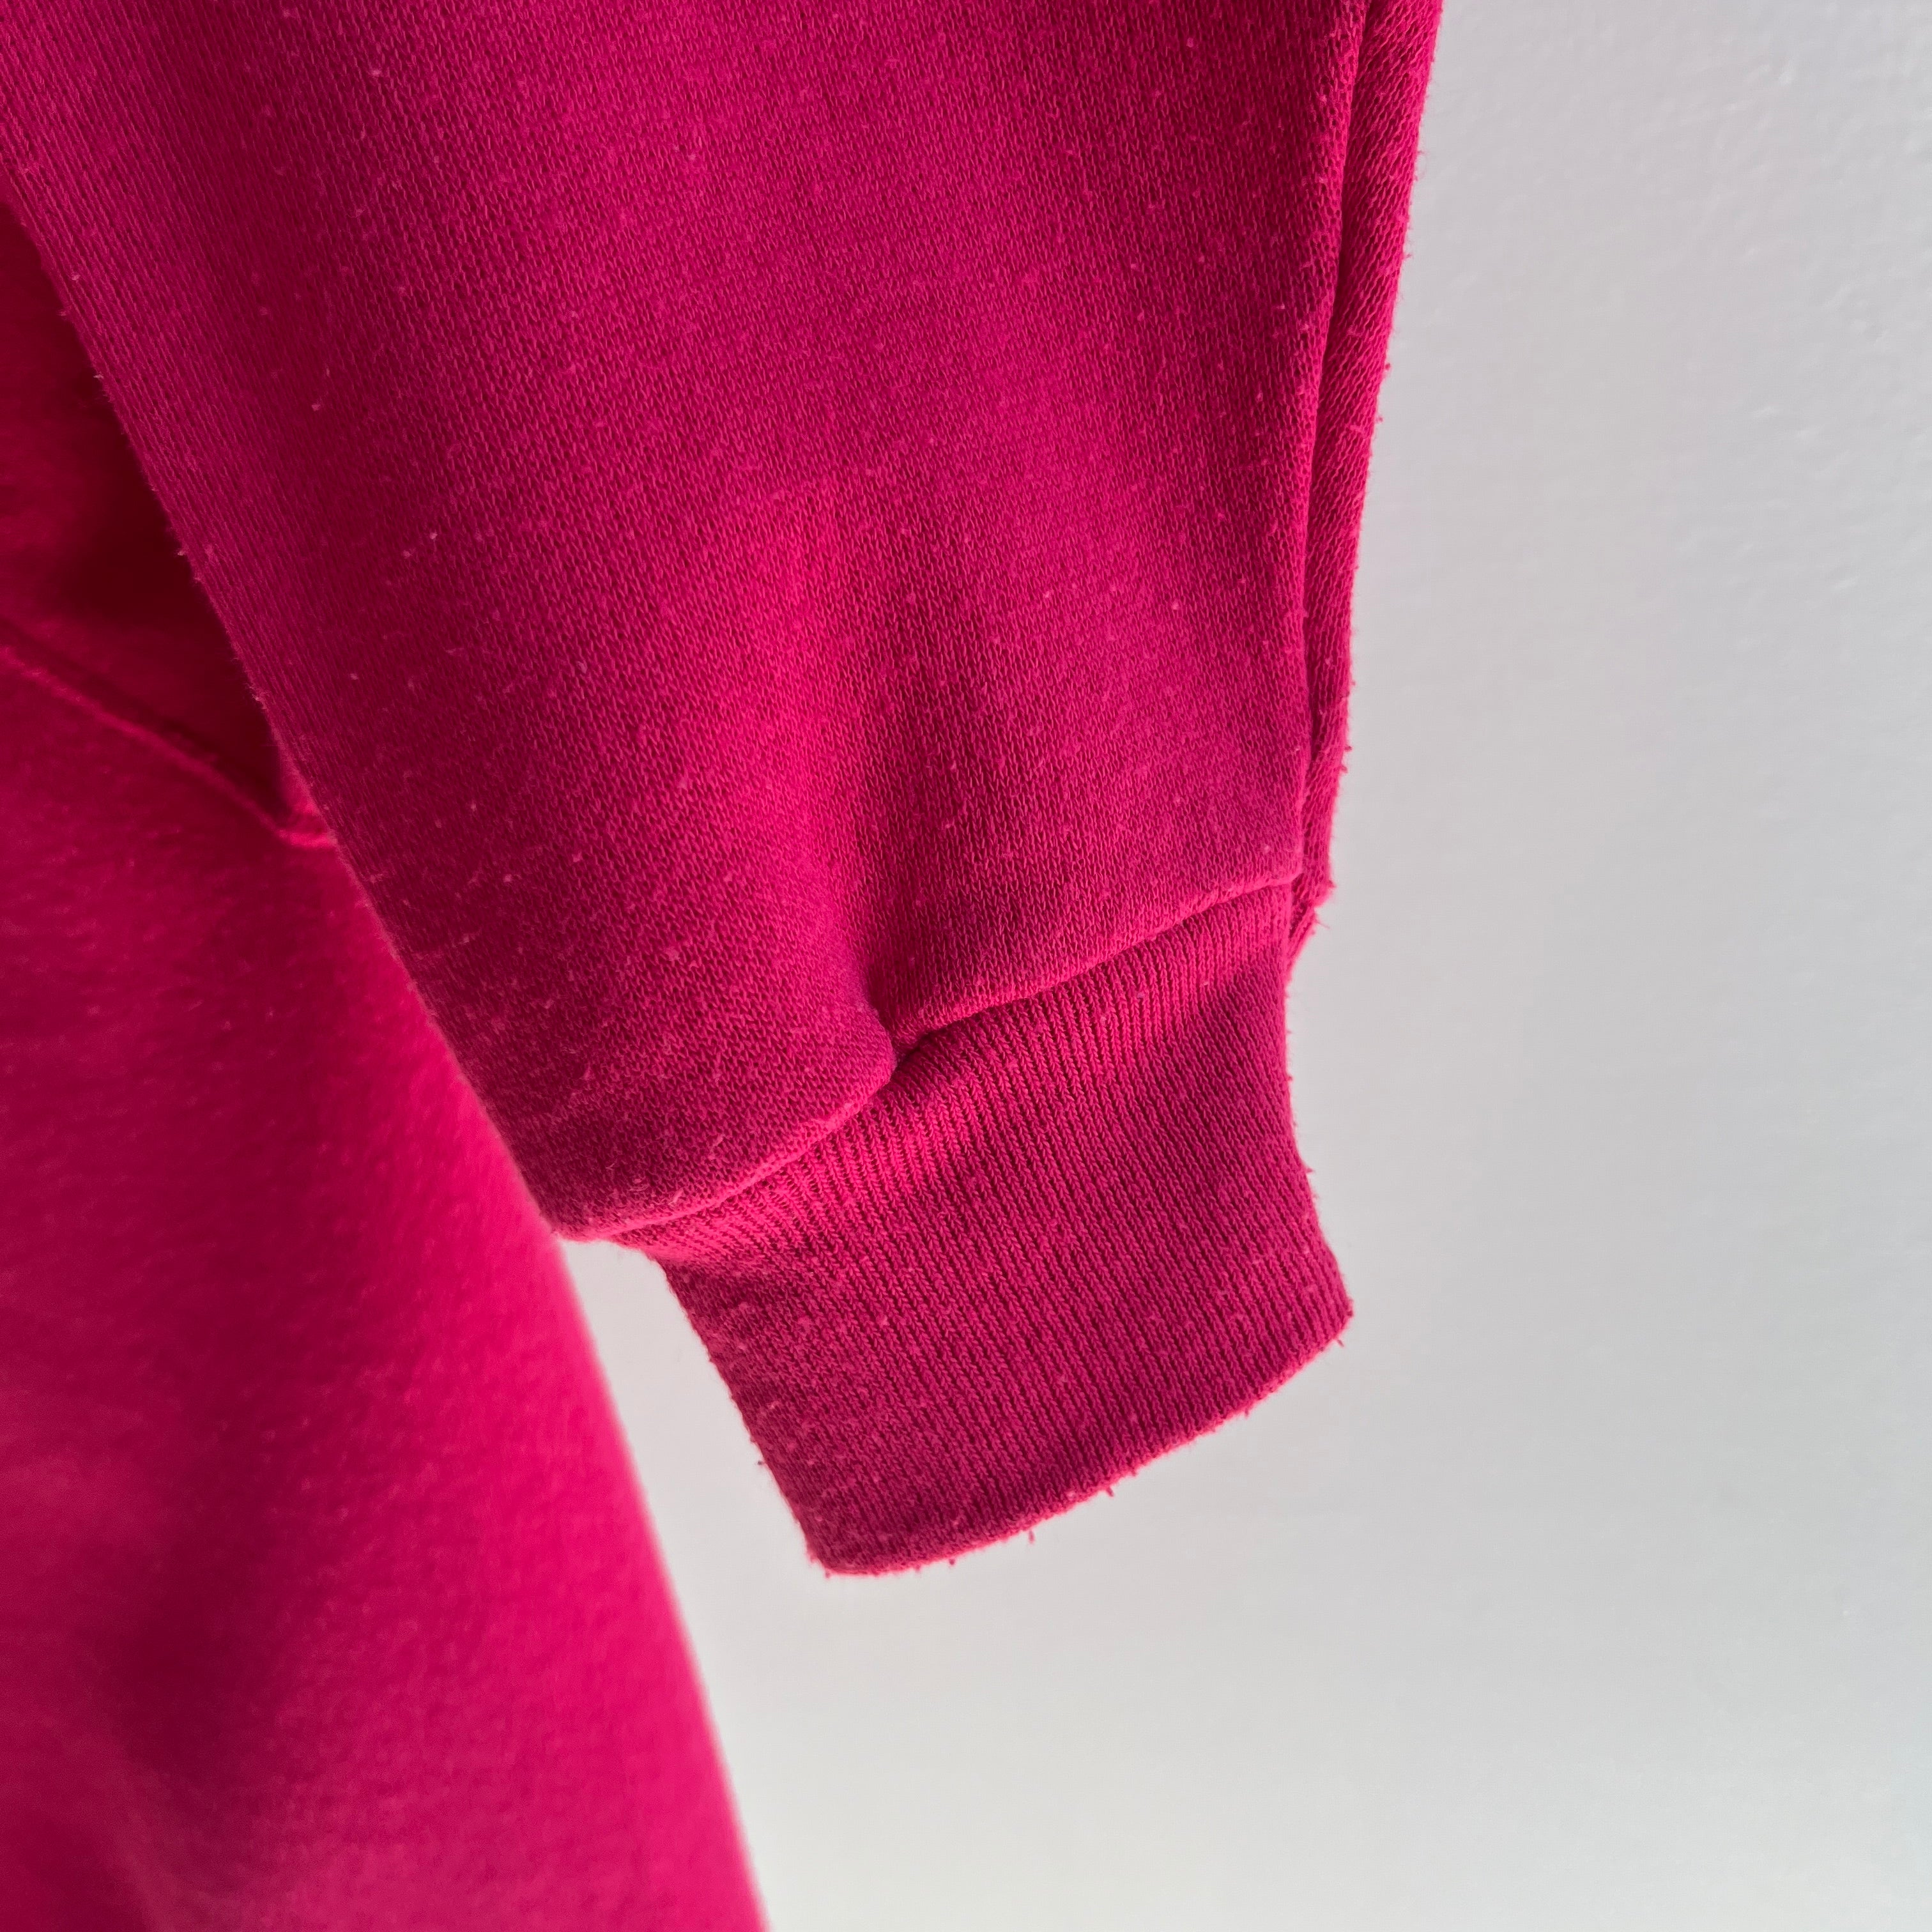 1990s Hot Pink USA Made Sweatshirt by Tultex